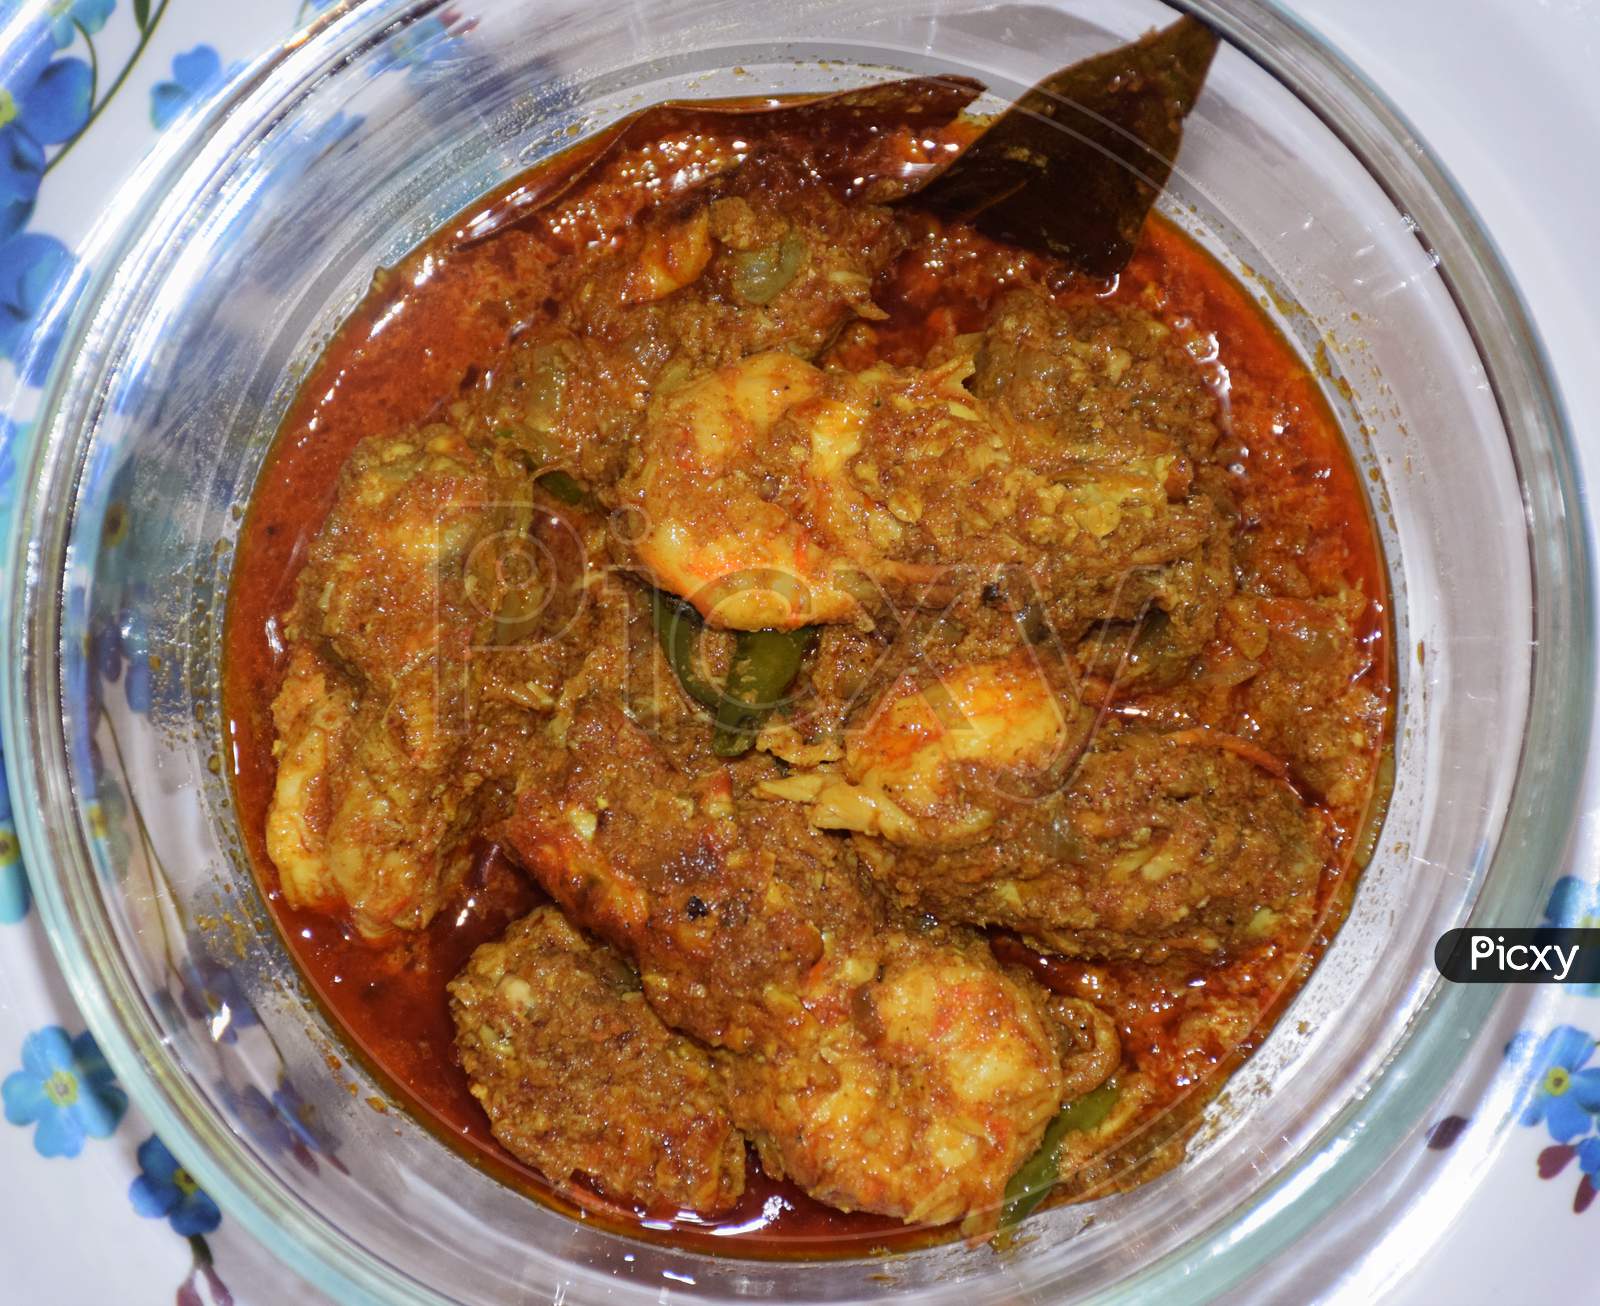 Prawn or Shrimp Curry a Traditonal Bengali Non Veg Dish